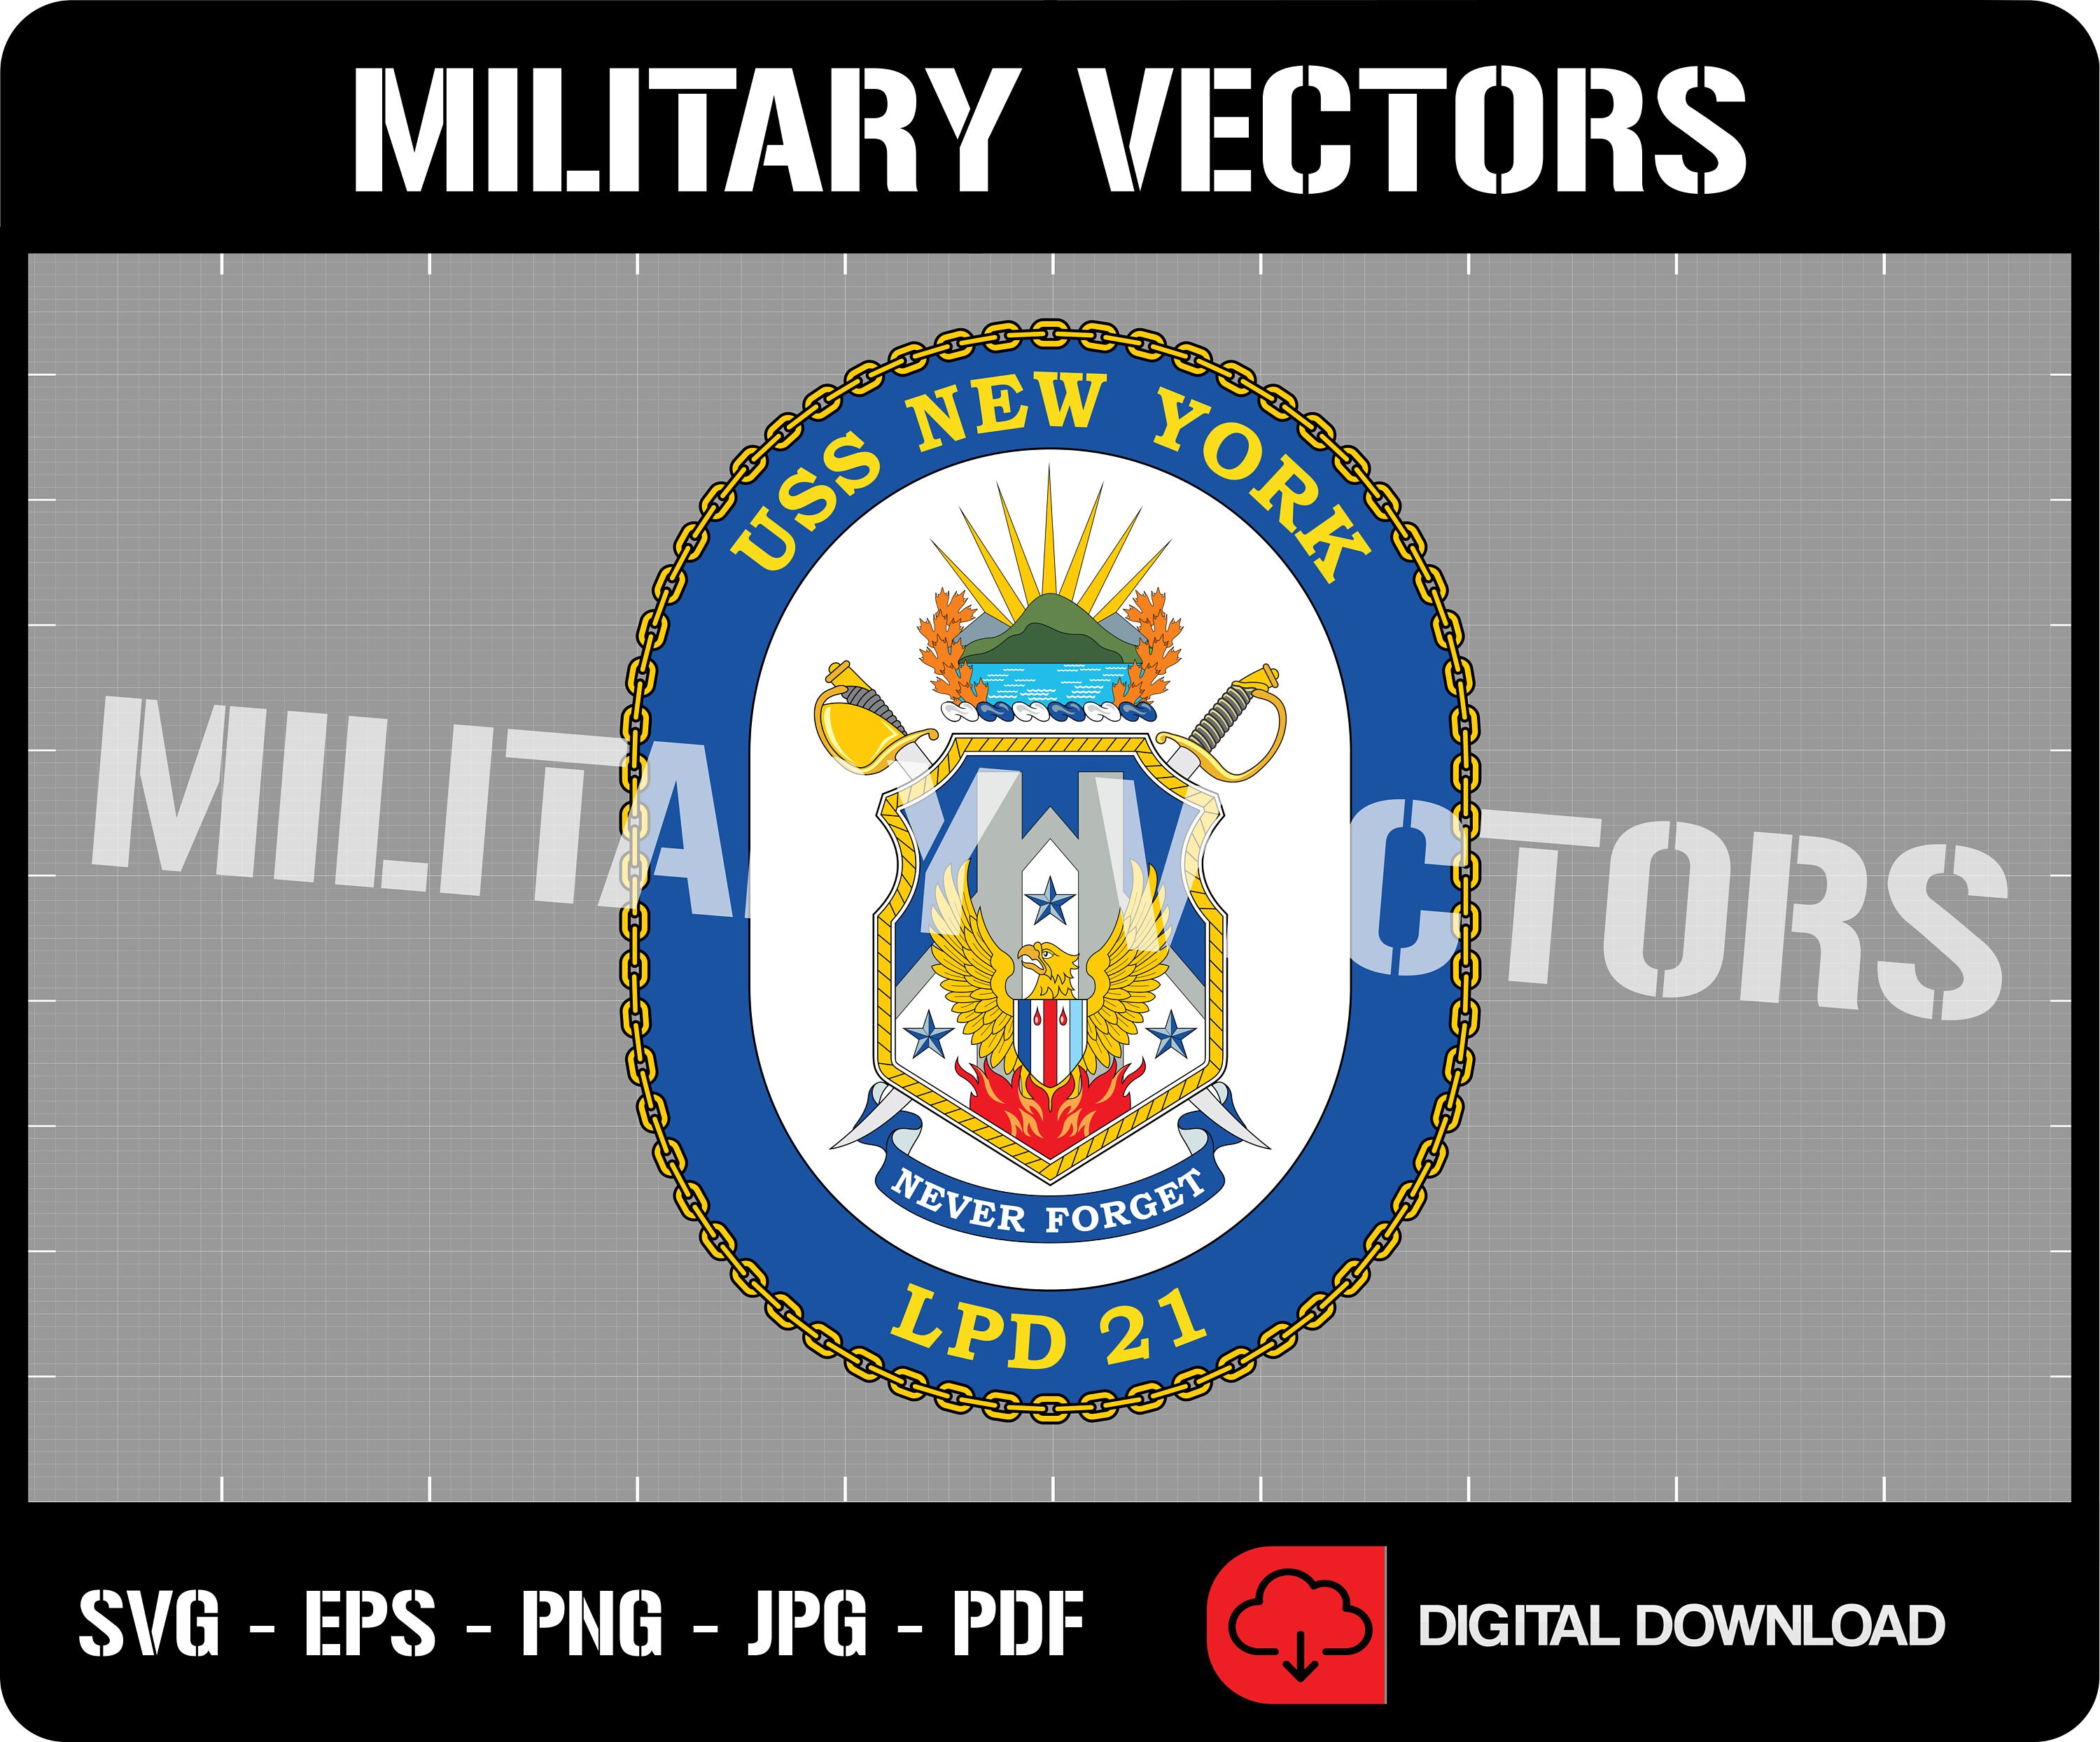 David Jones Logo PNG & Vector (EPS) Free Download